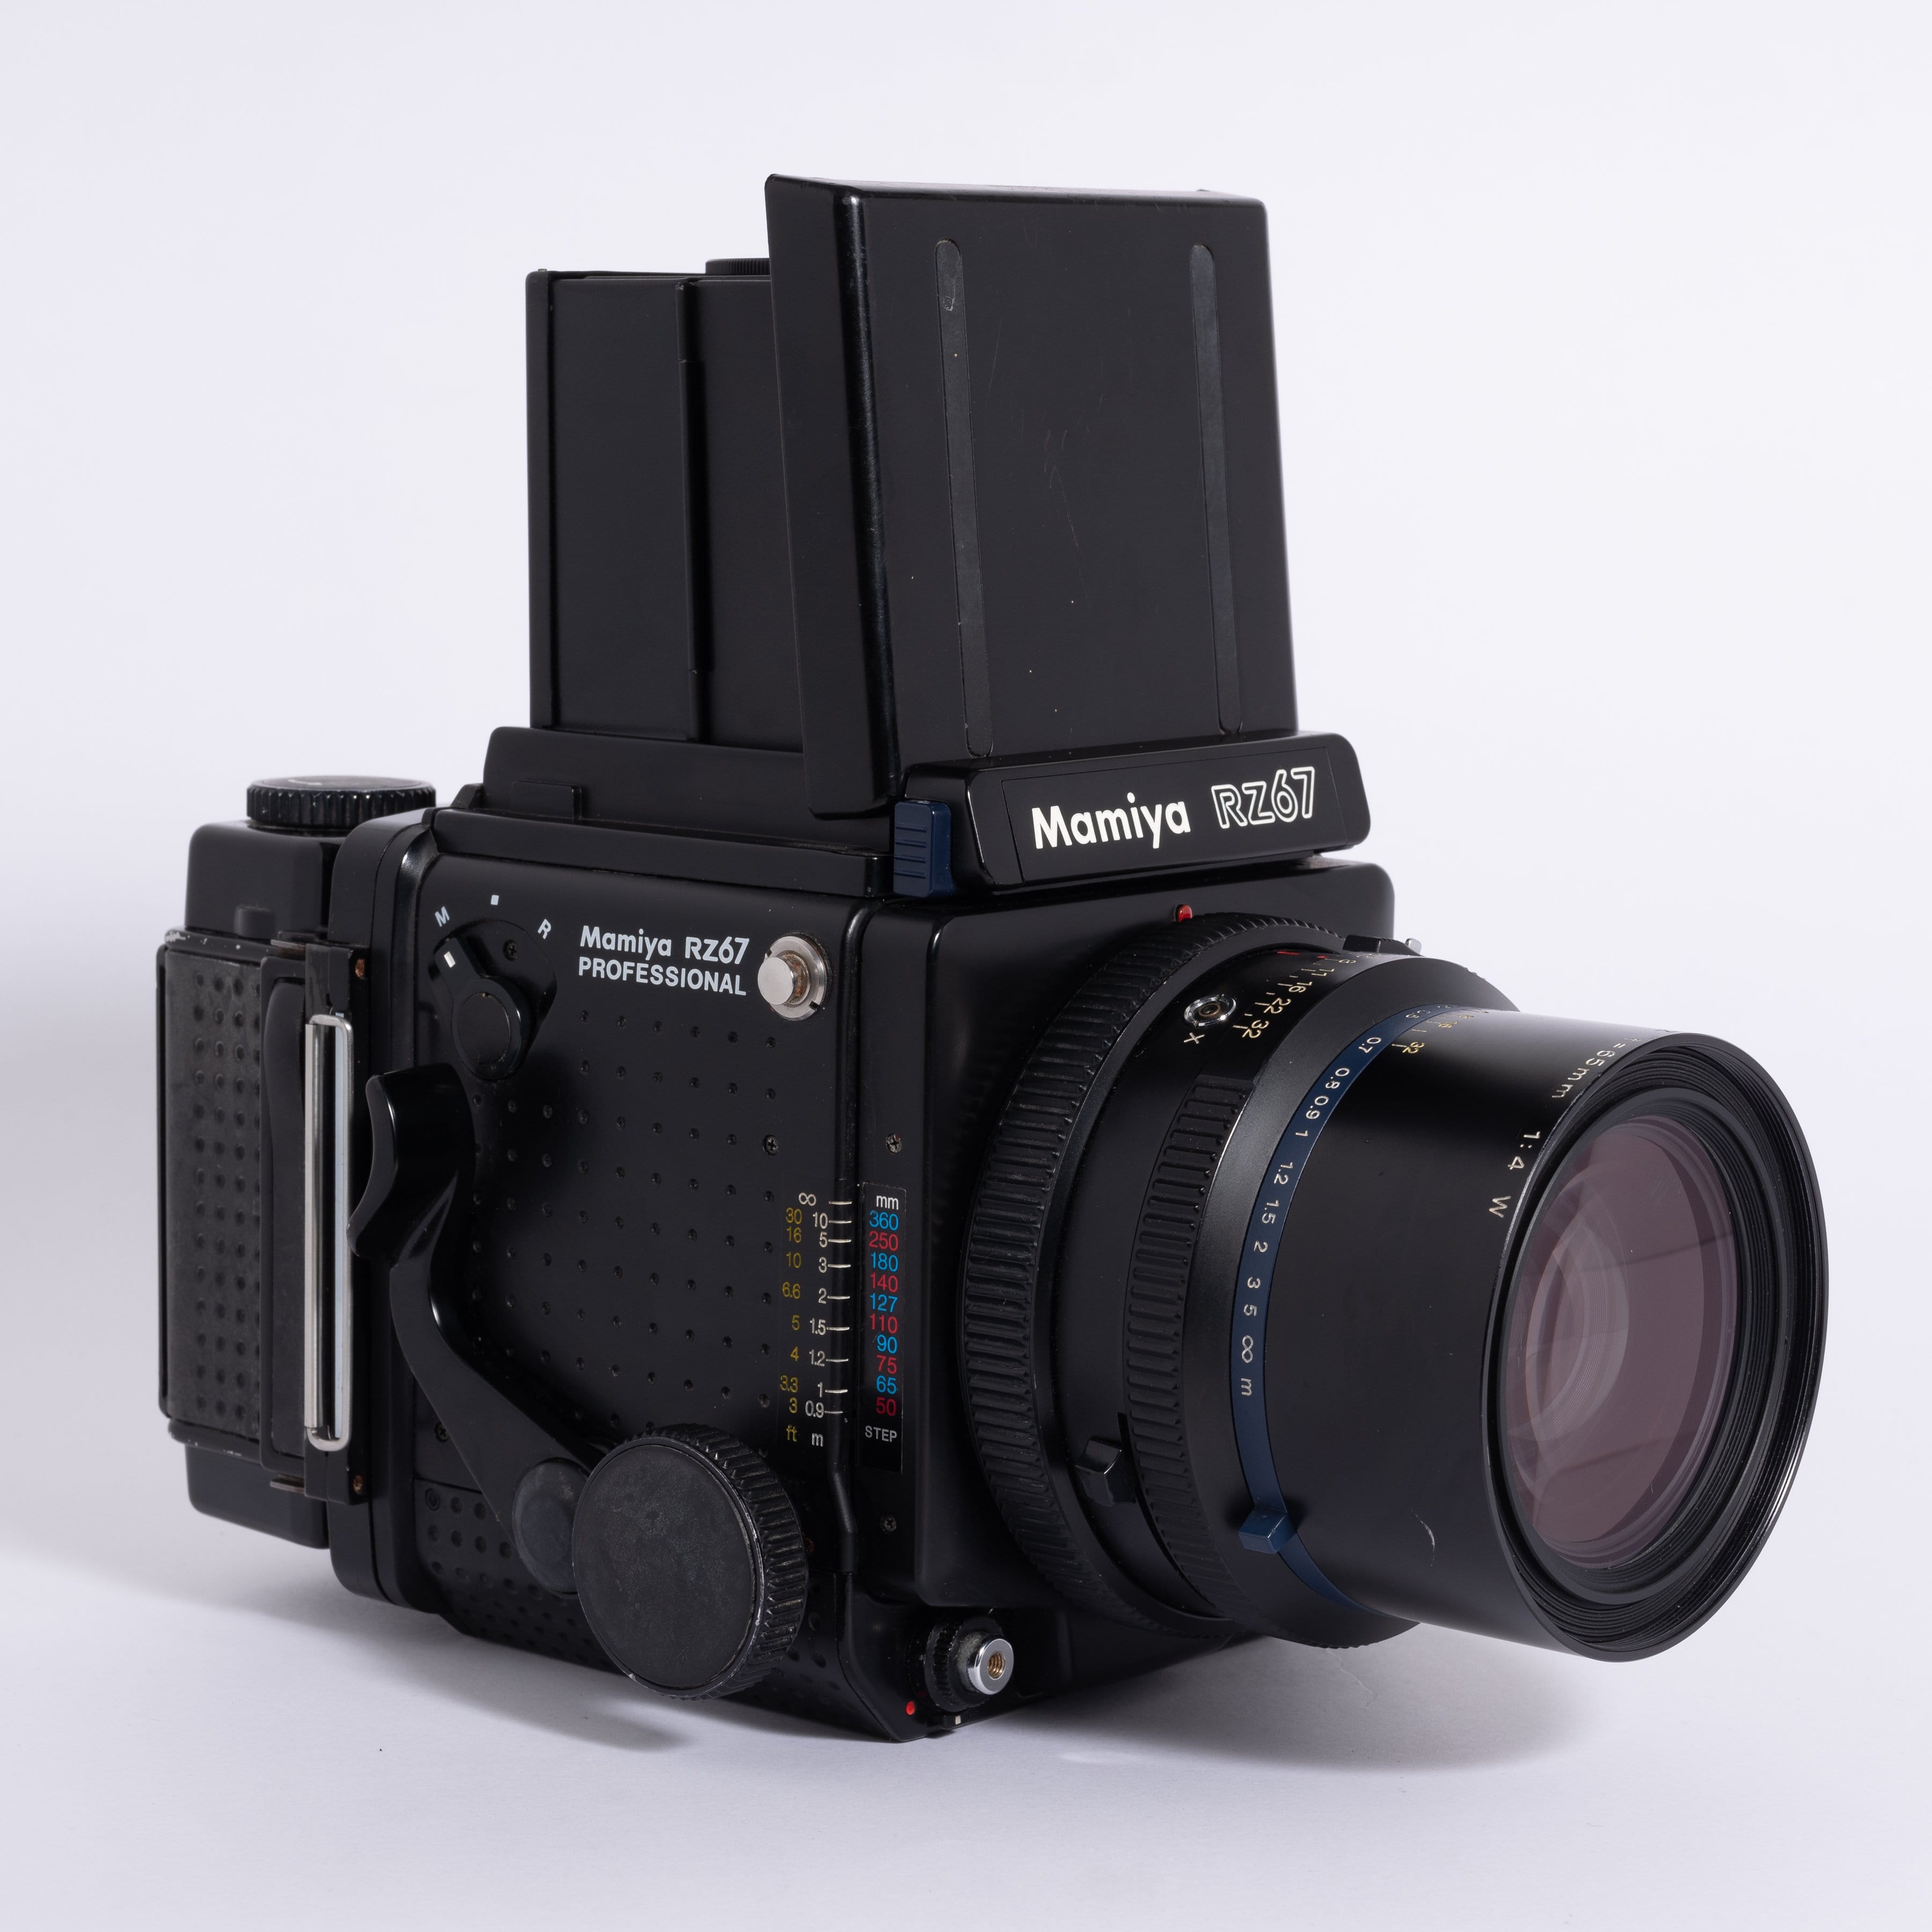 Mamiya RZ67 Professional with Mamiya-Sekor 65mm f/4 Lens – Film